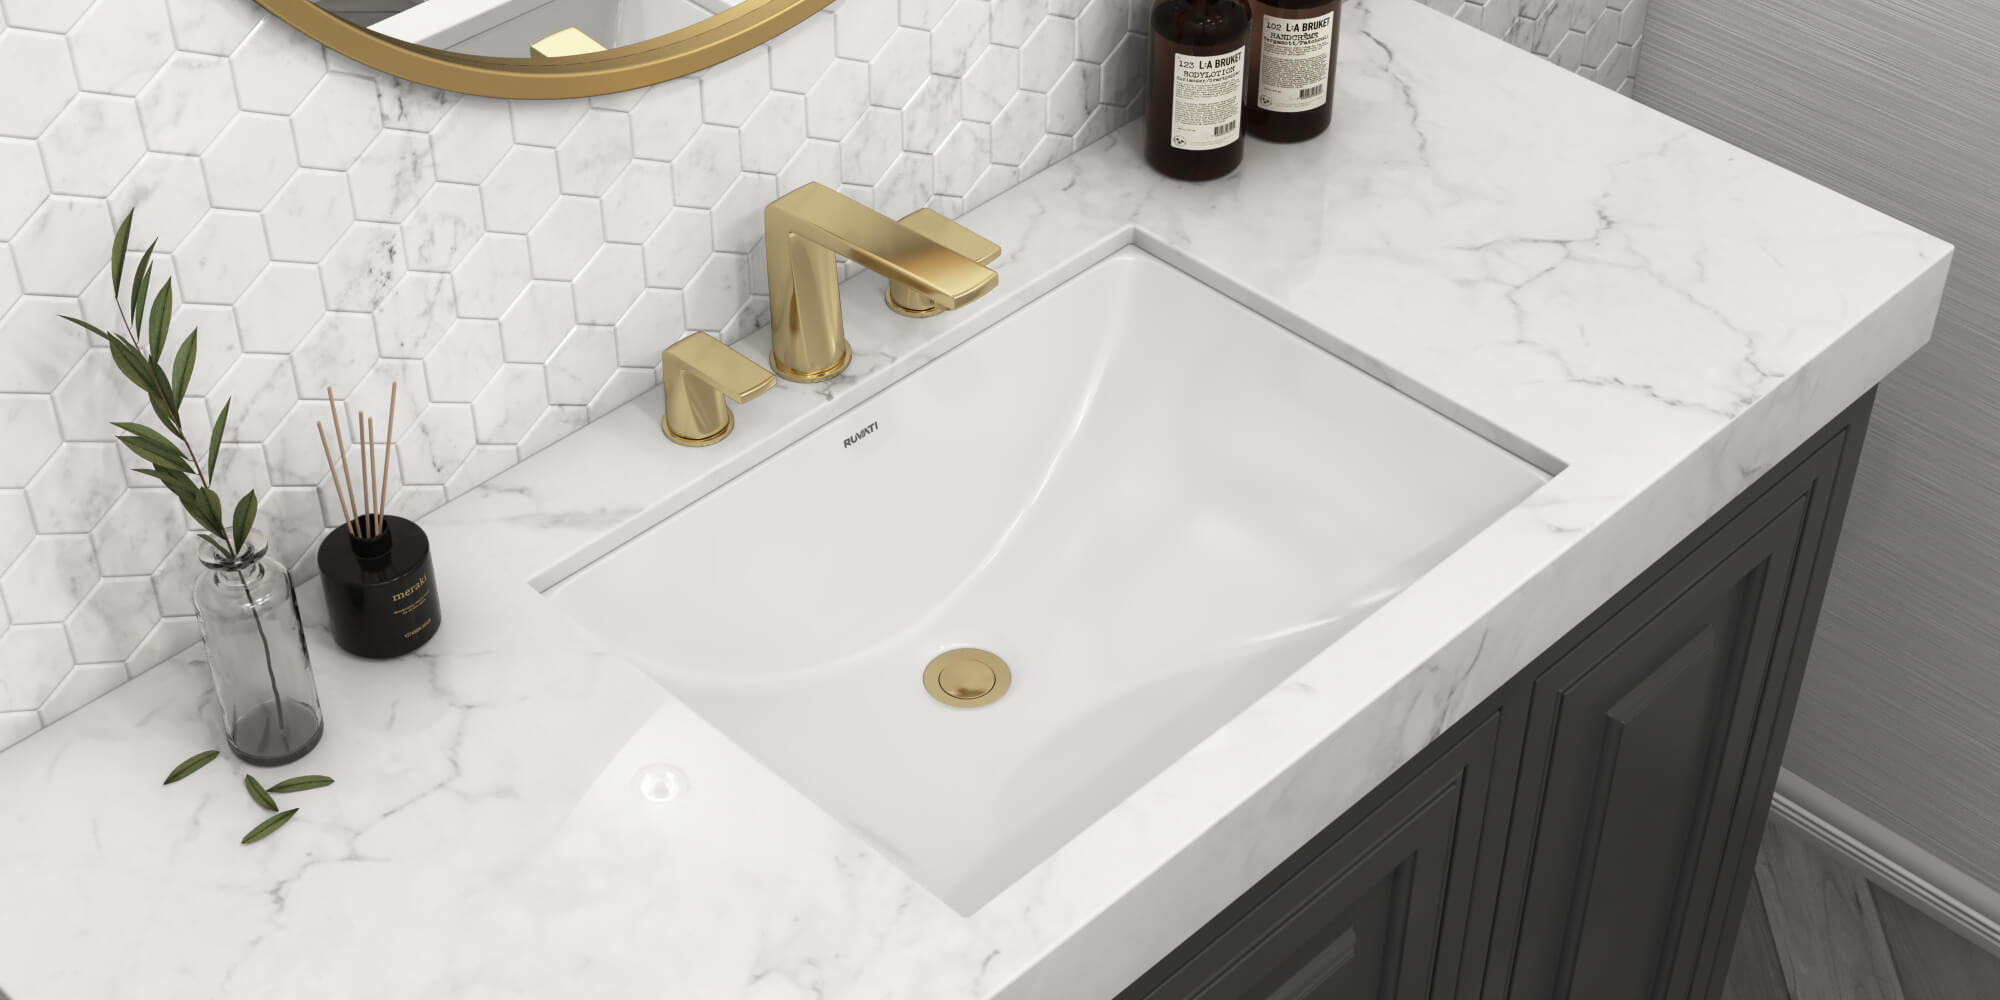 ruvati 18 x 13 inch undermount bathroom sink white rectangular